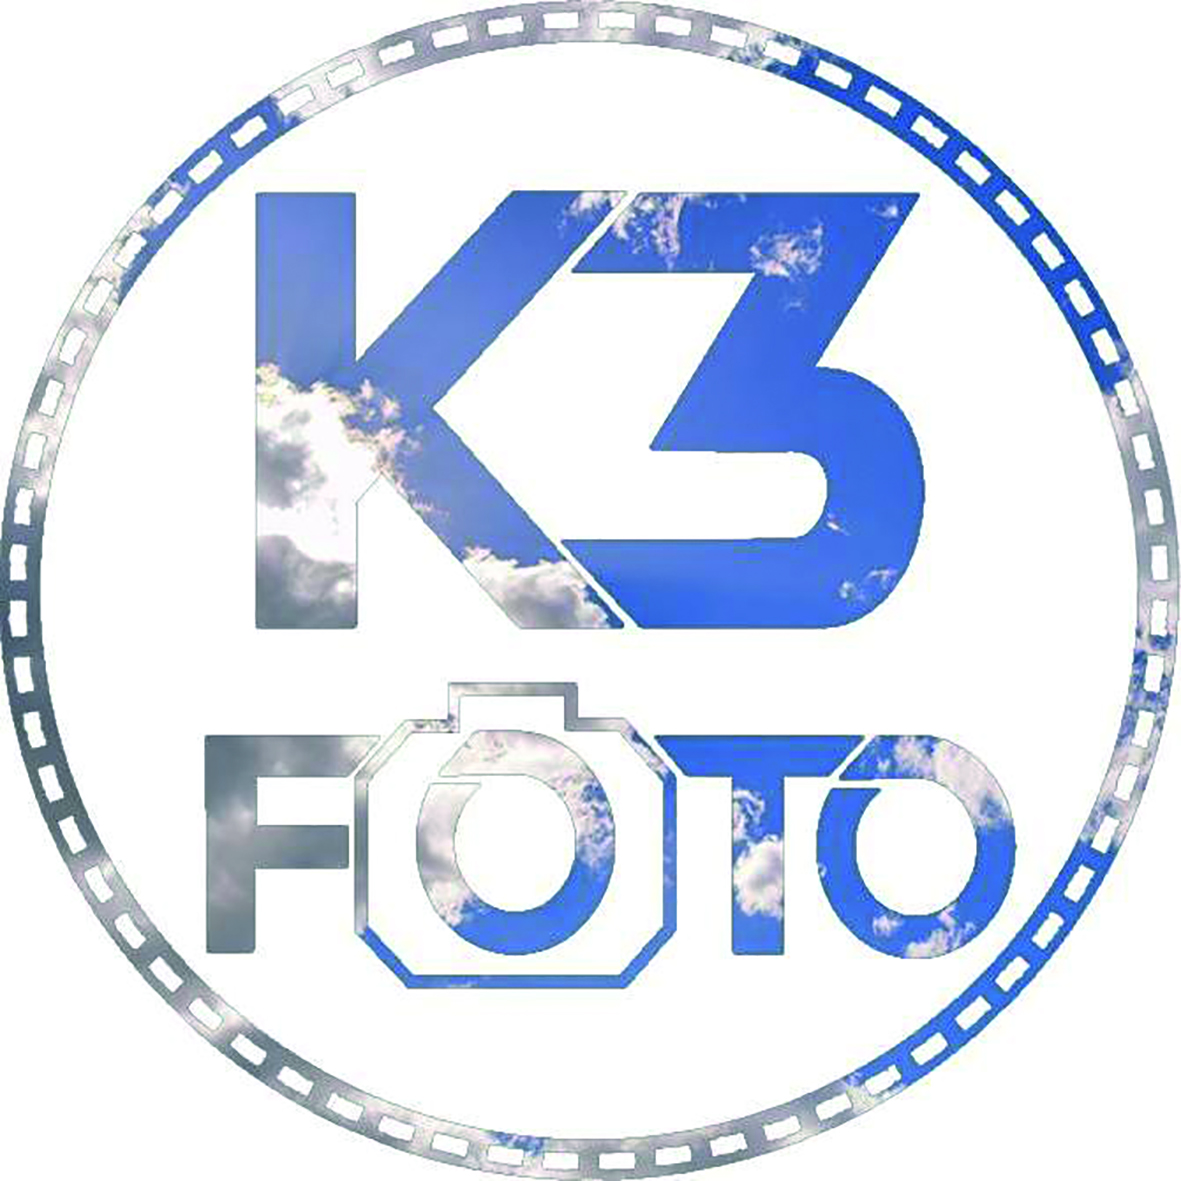 Siegerfotos sponsored by K3 Fotos - thank you!